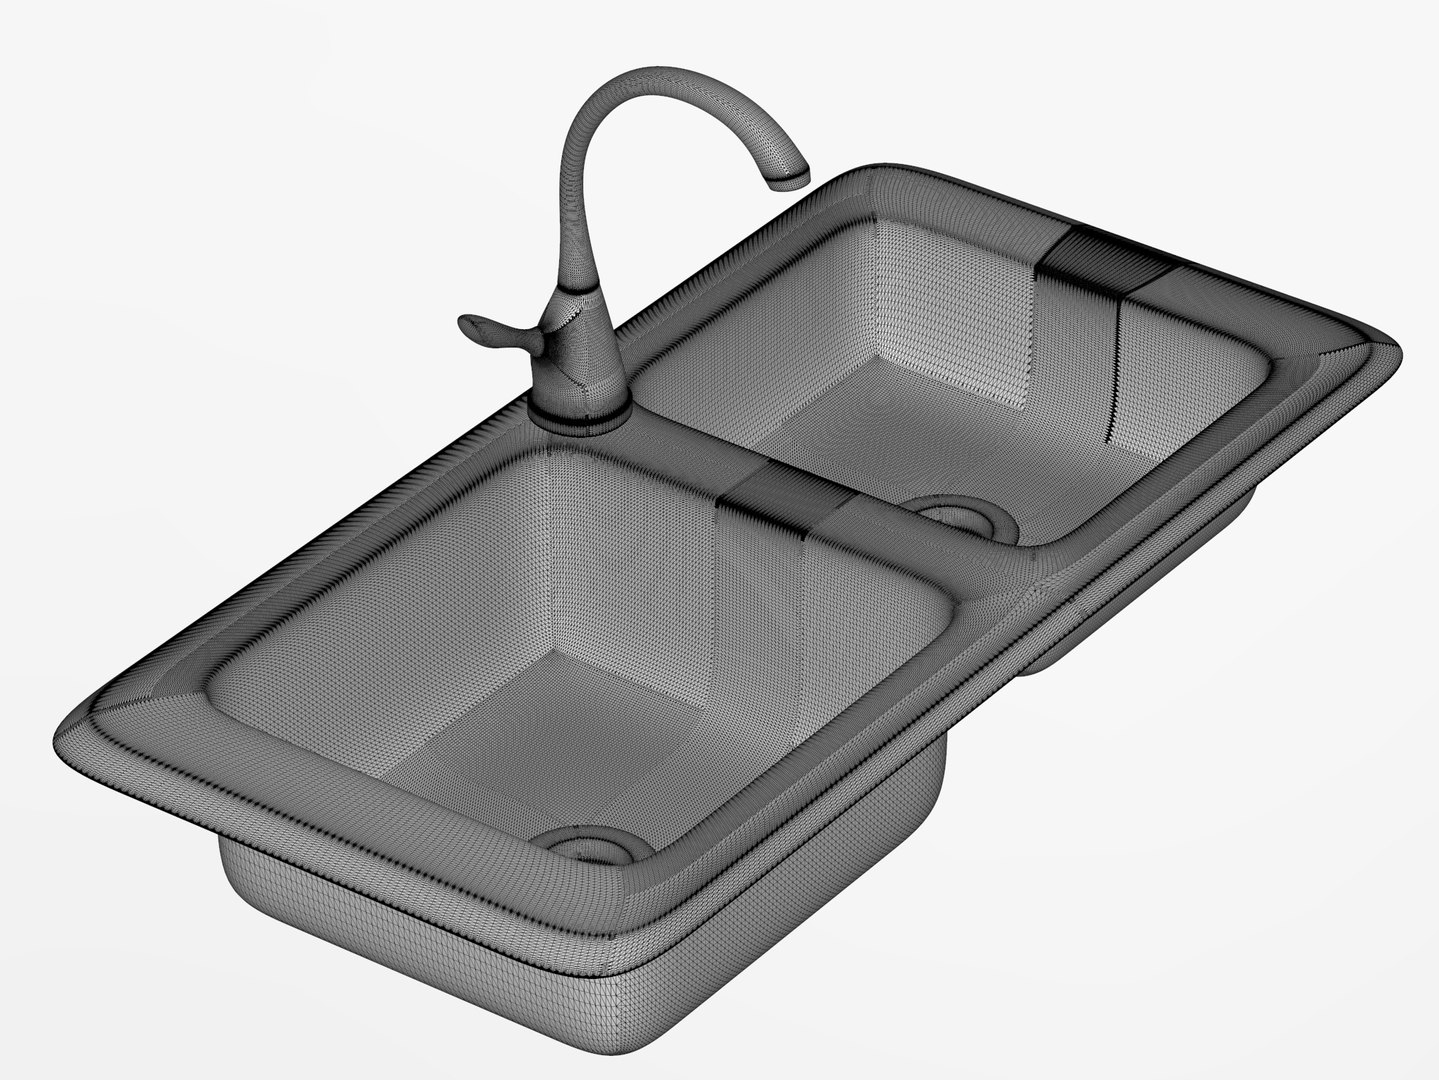 Free 3d Model Kitchen Sink Turbosquid 1757550